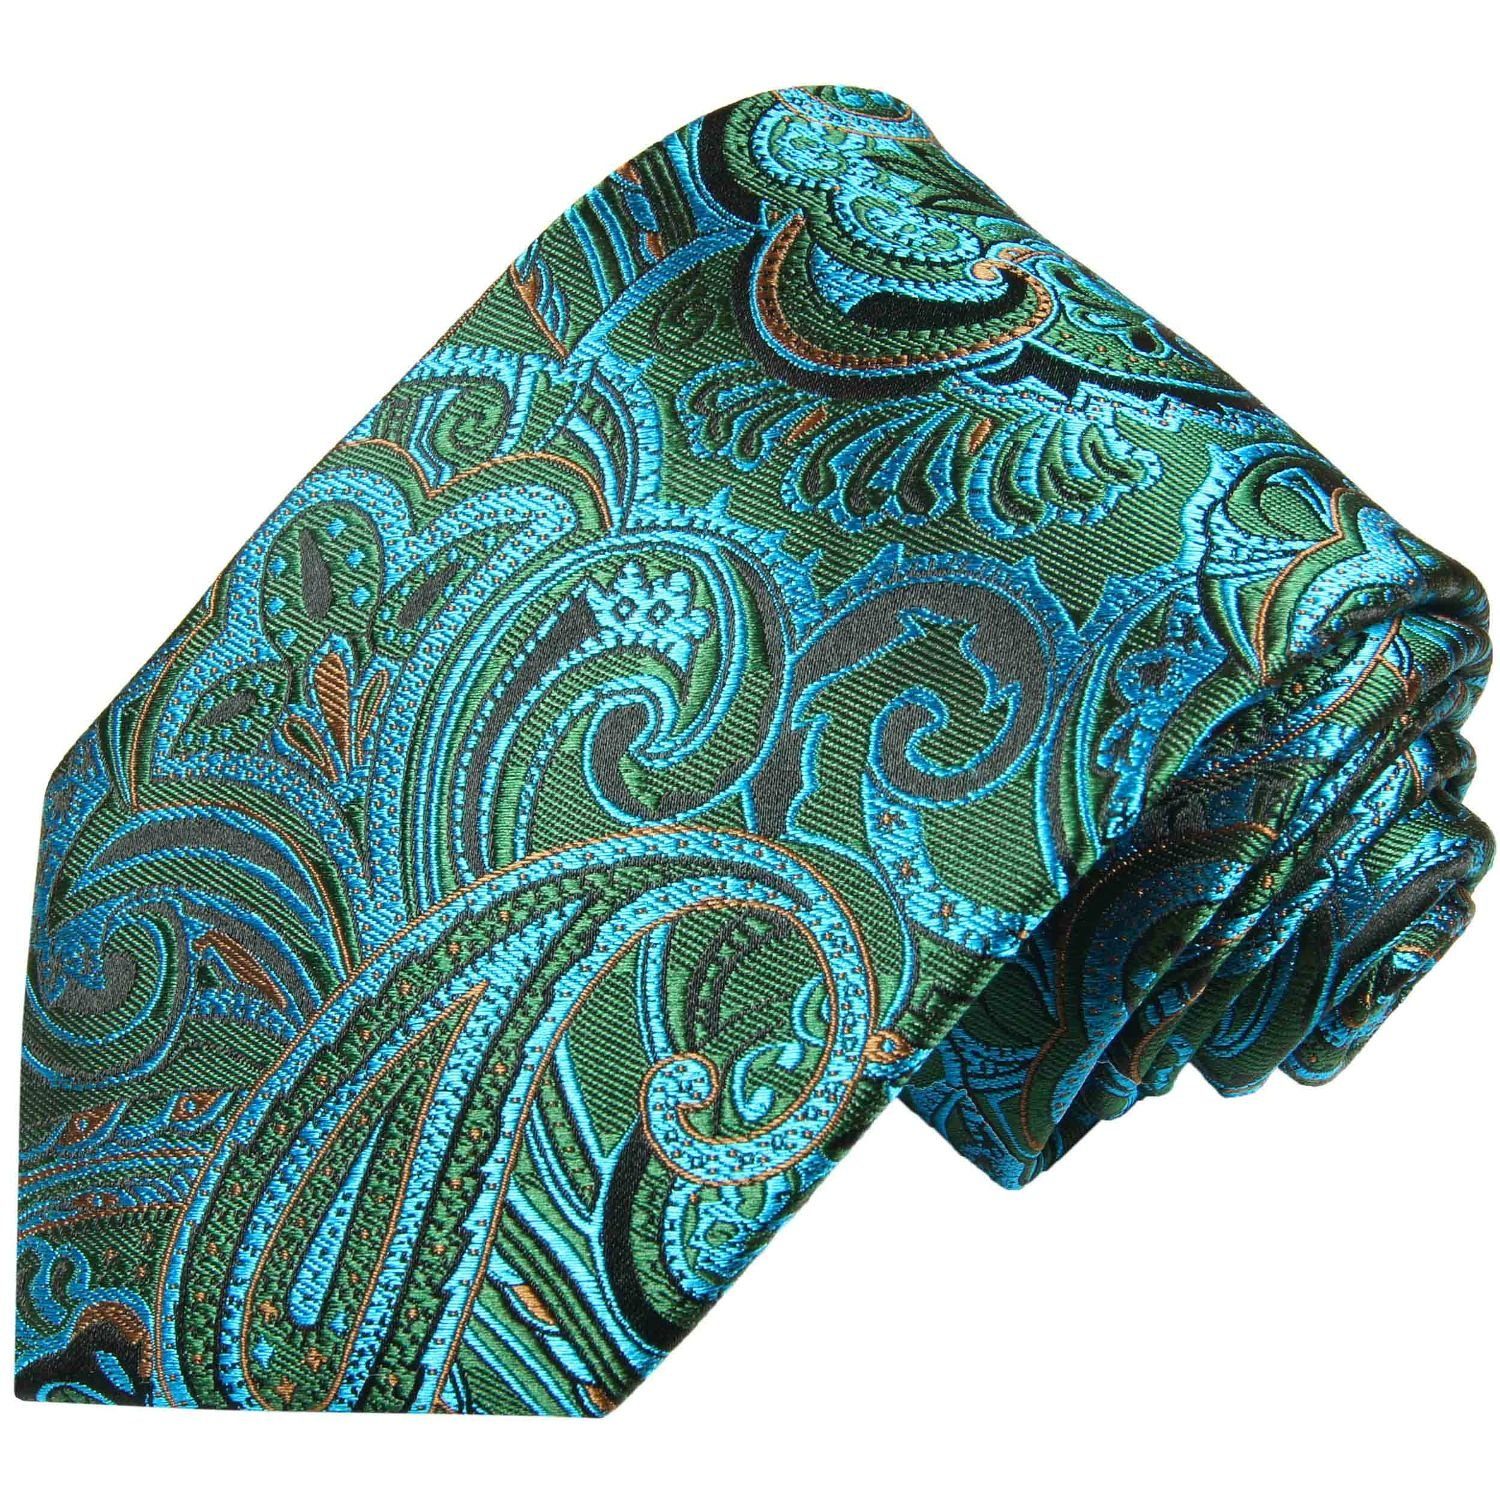 Paul Malone Krawatte Elegante Seidenkrawatte Herren Schlips paisley brokat 100% Seide Breit (8cm), blau grün türkis 2008 | Breite Krawatten